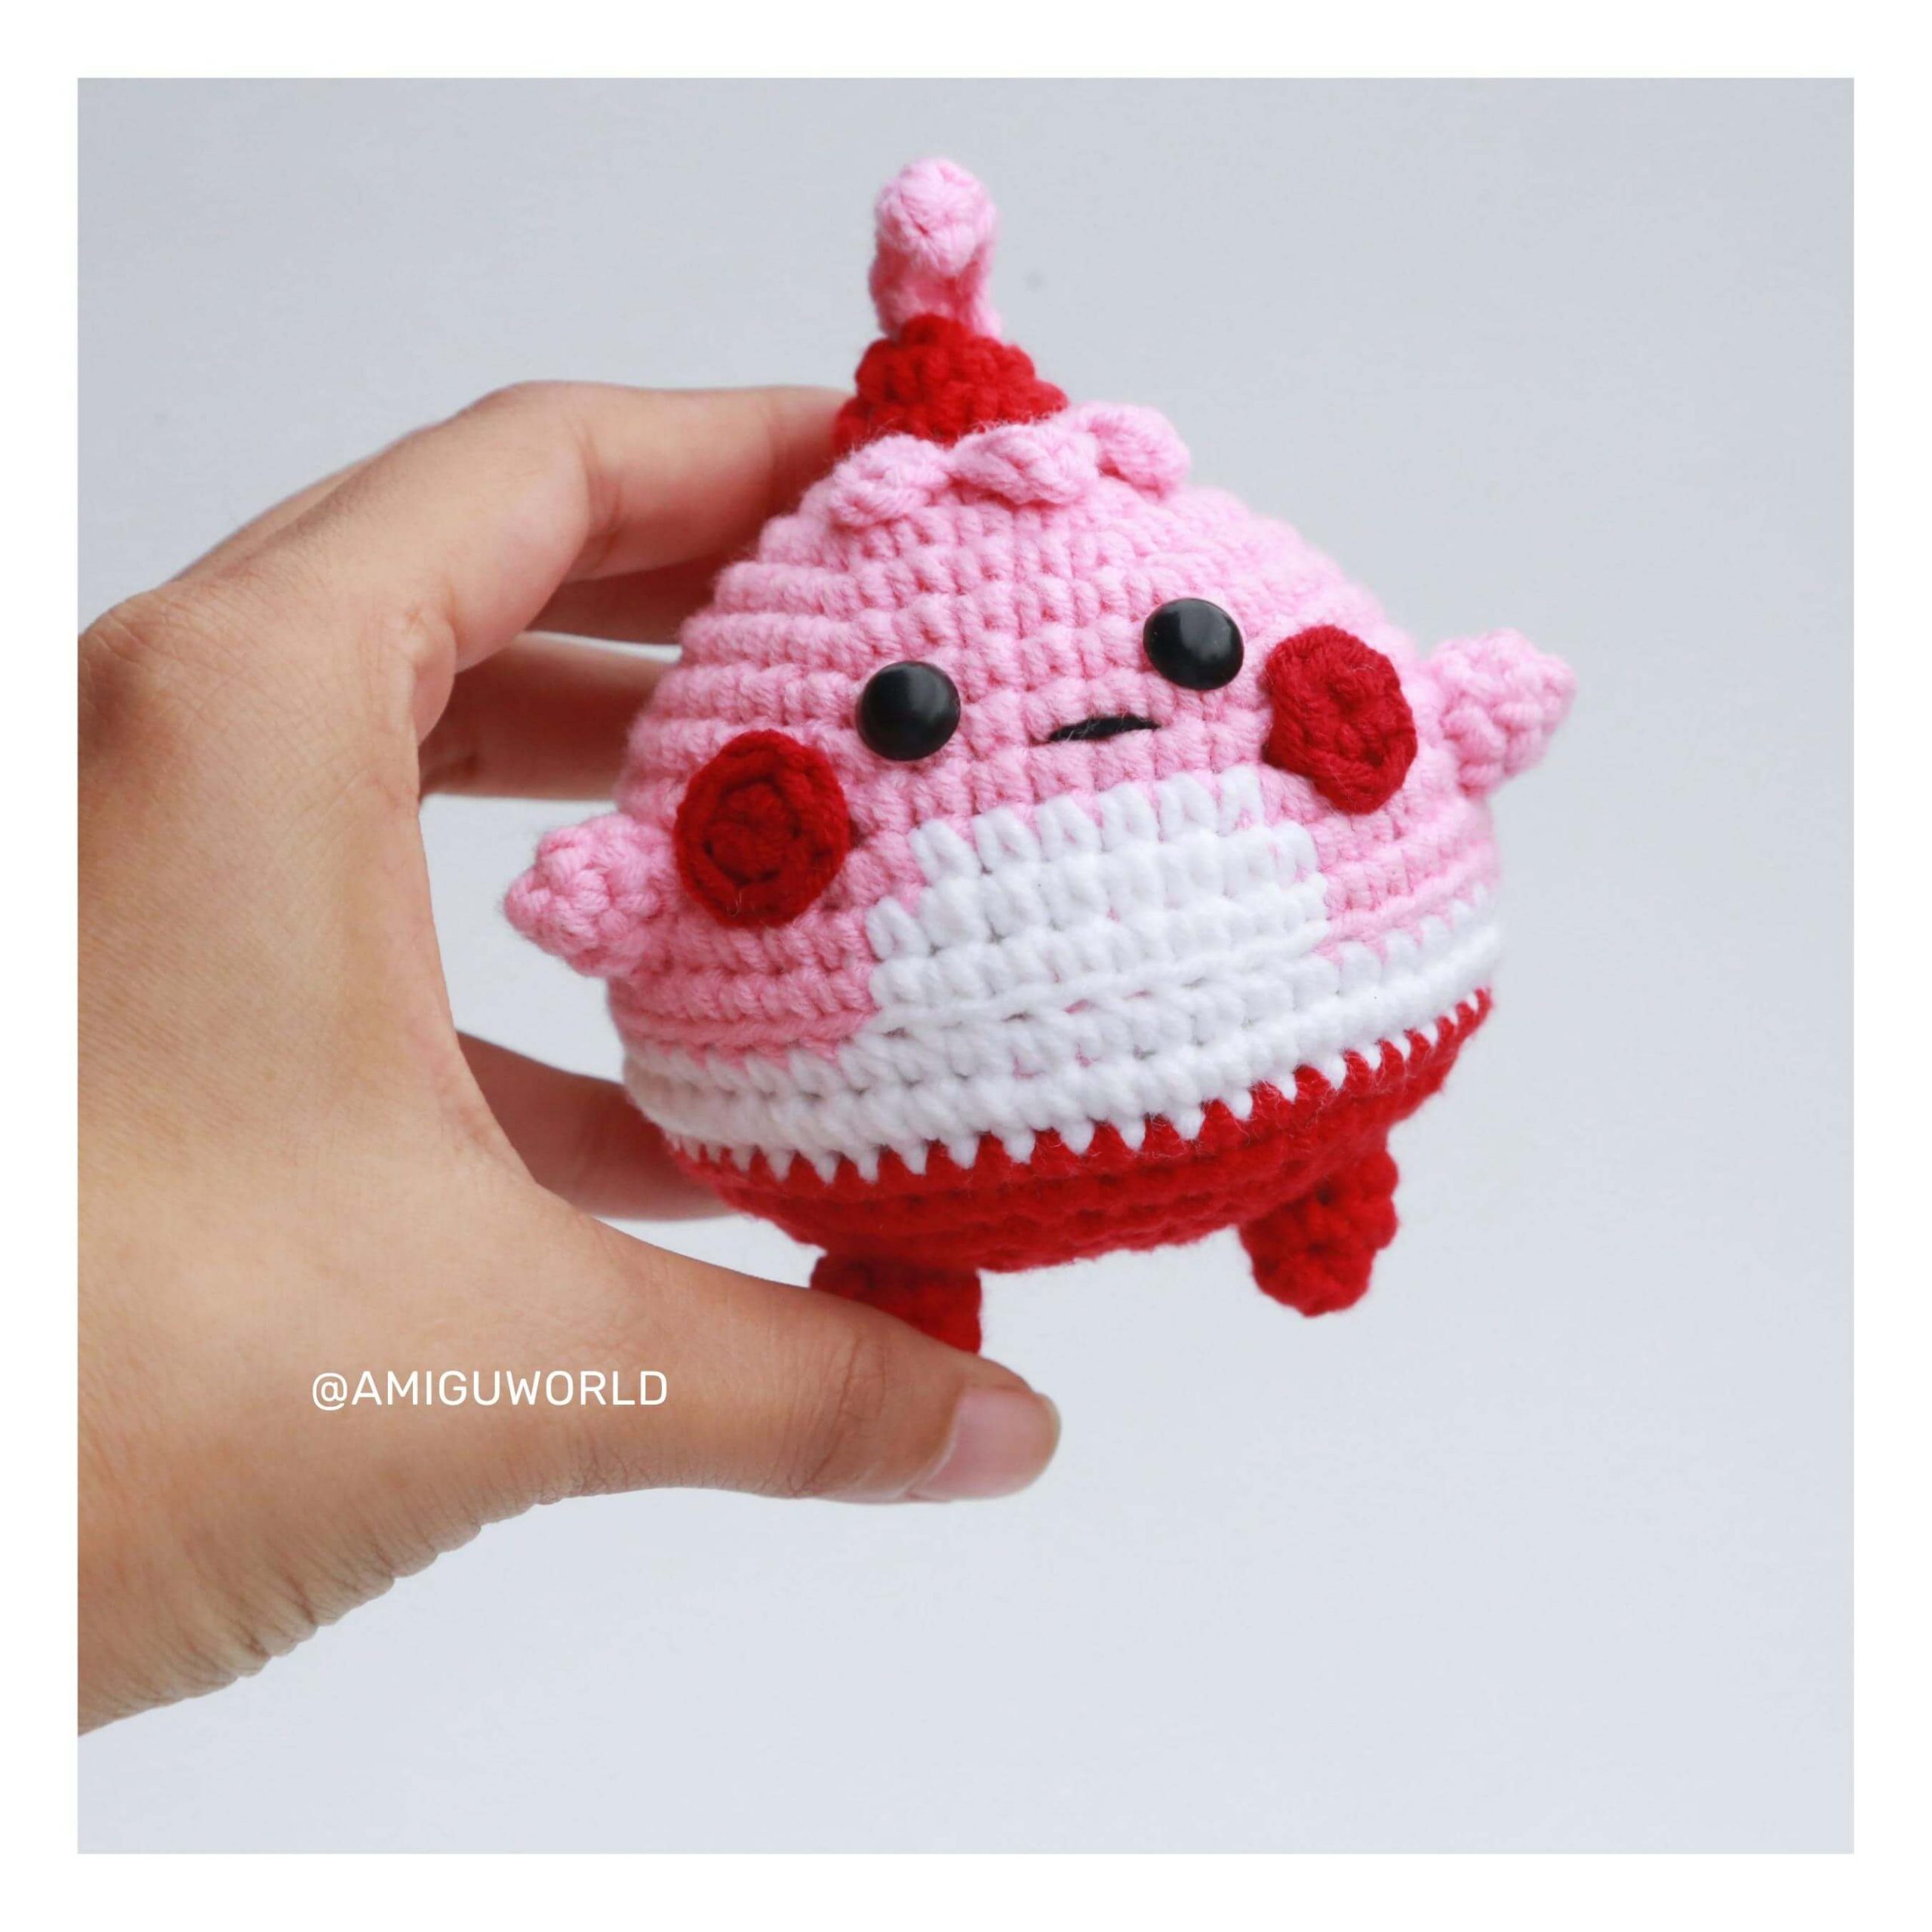 Happiny-amigurumi-crochet-pattern-amiguworld (9)